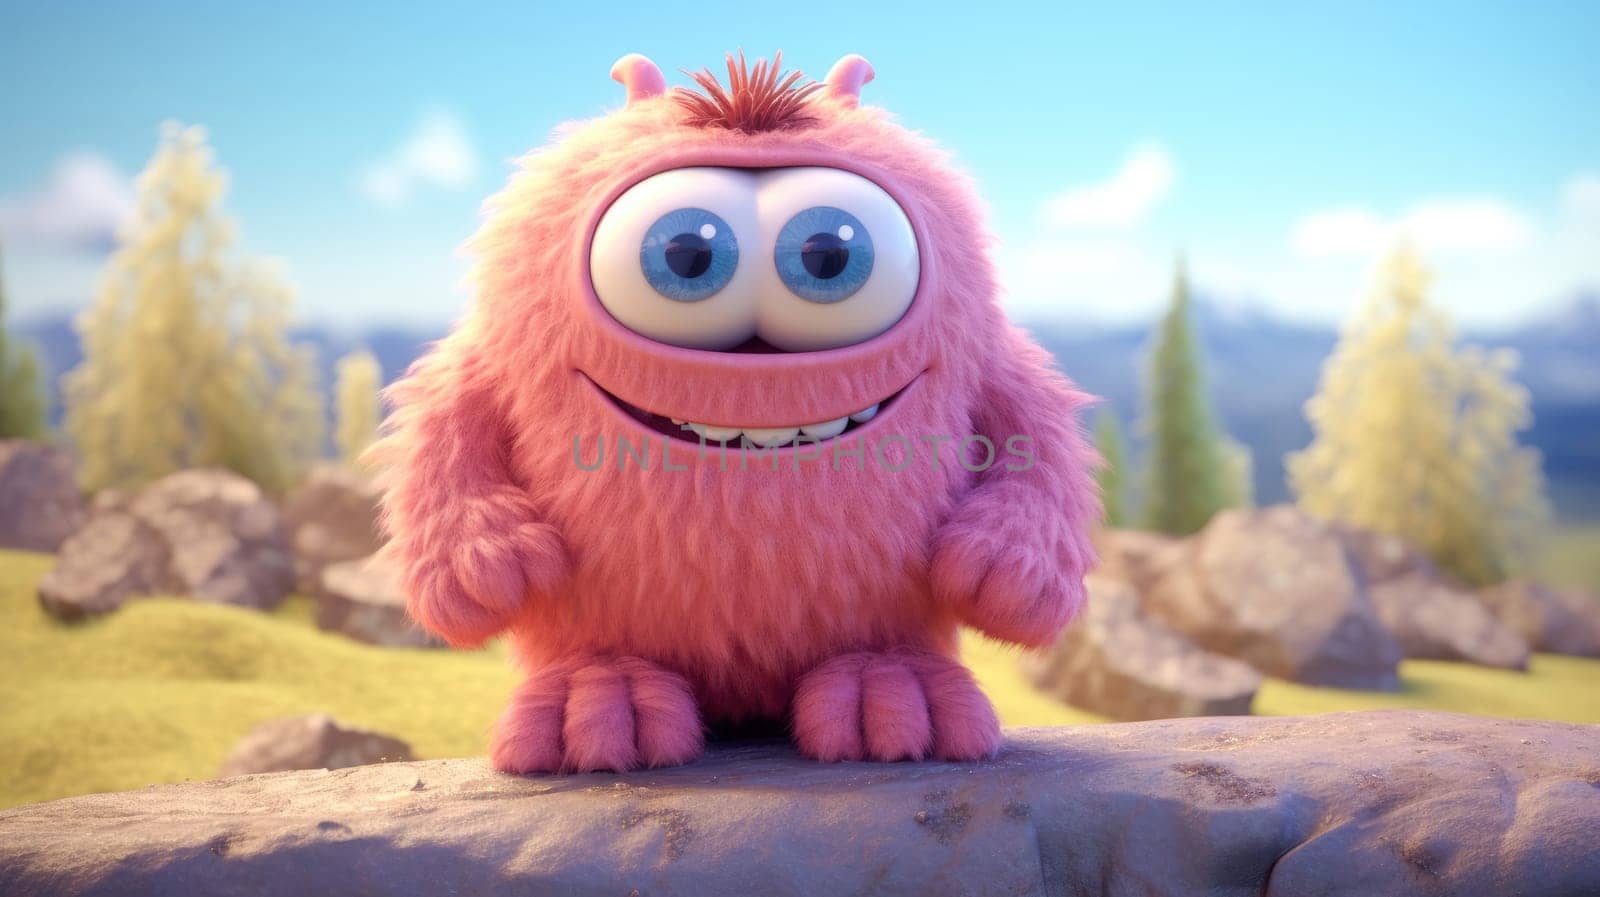 Cute Furry fluffy pink Monster, cartoon 3d, alien monster illustration, on spring background. by JuliaDorian